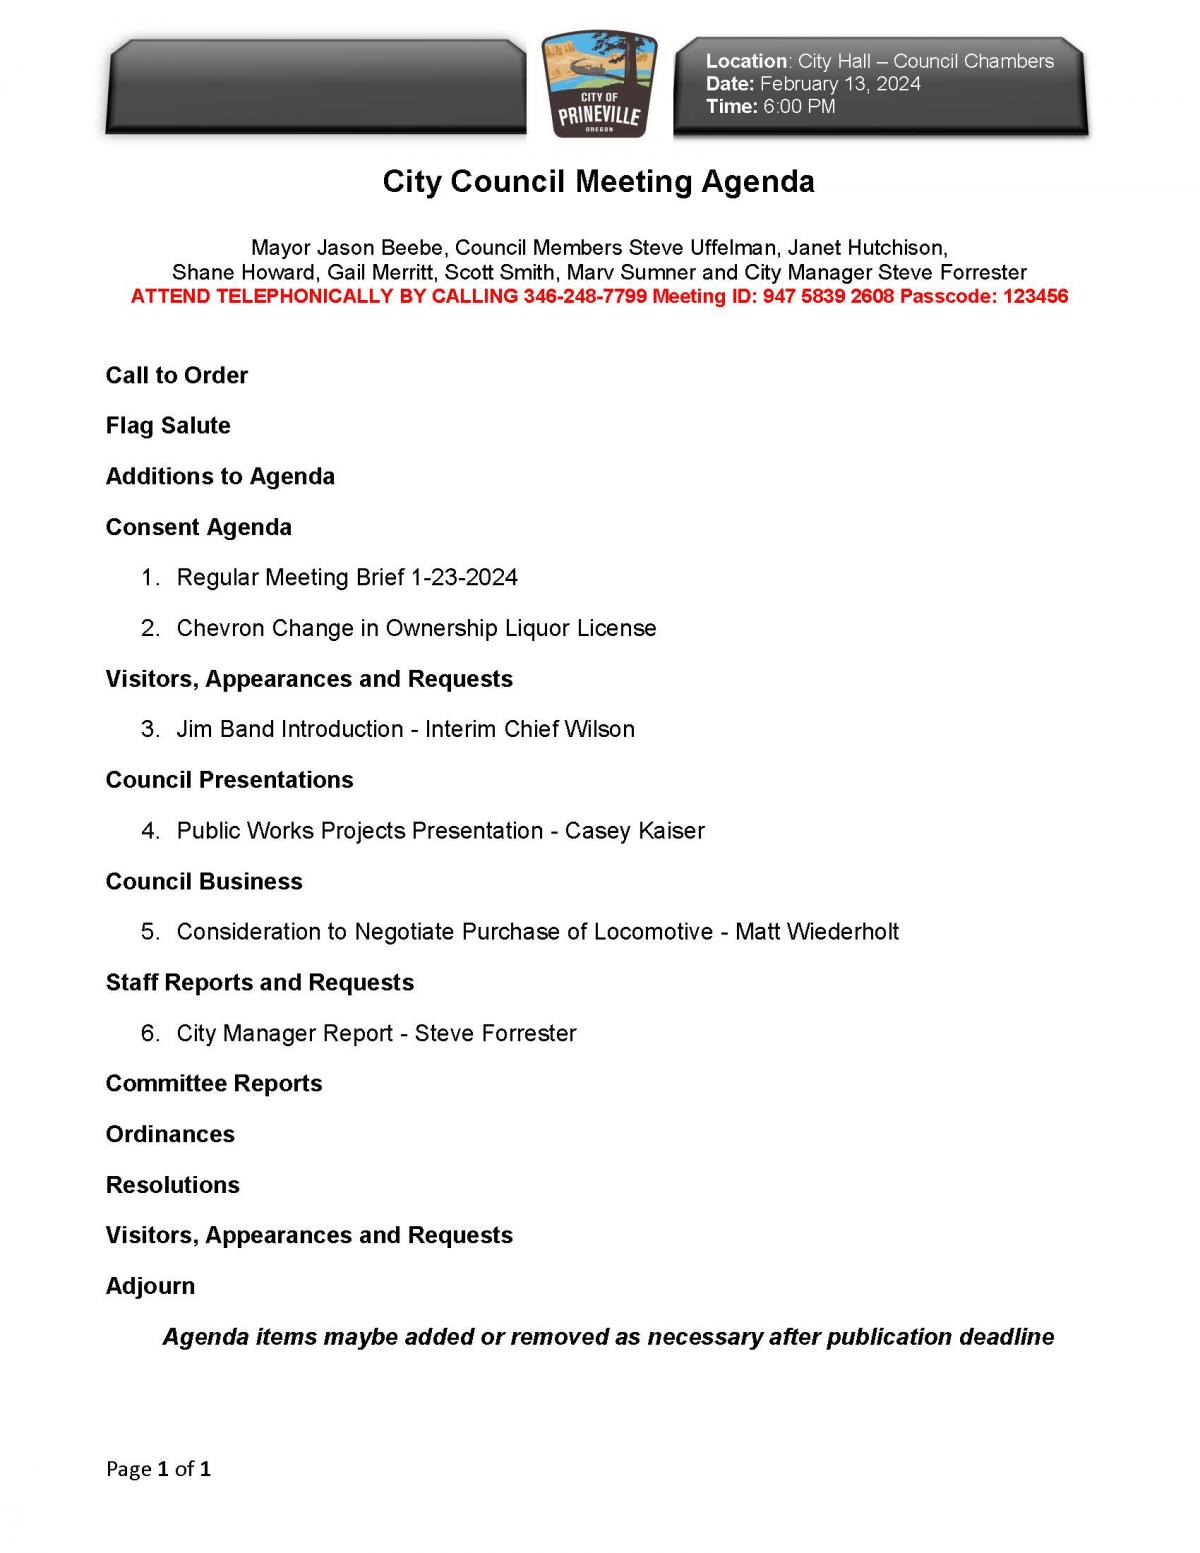 Council Agenda 2-13-2024